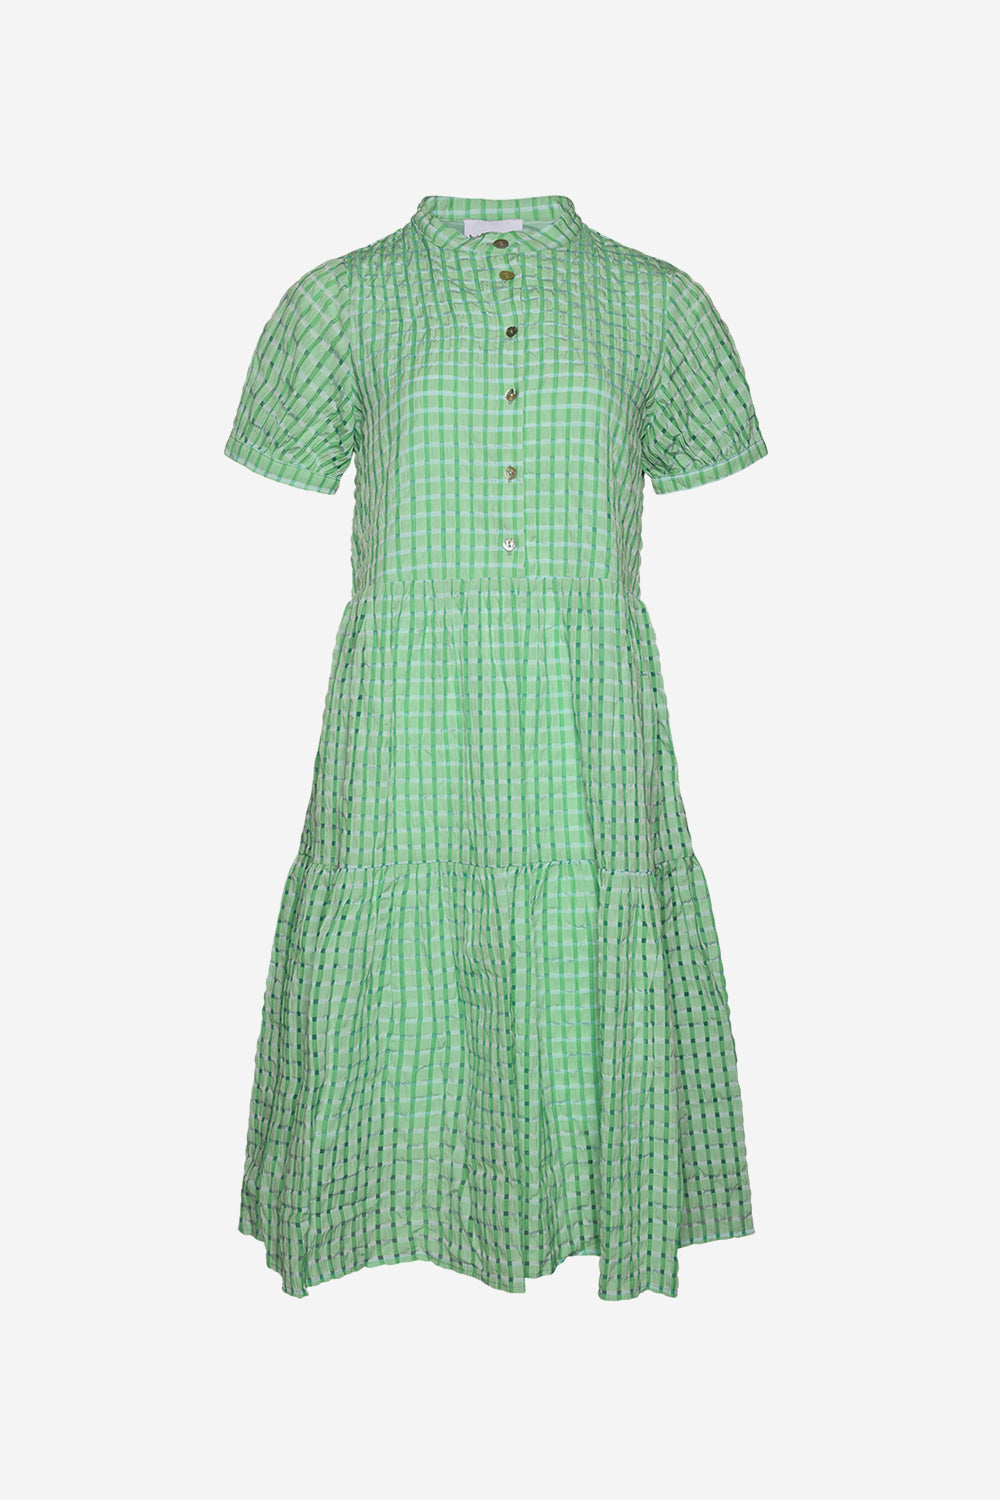 Dicte Lipe Dress S/S Green